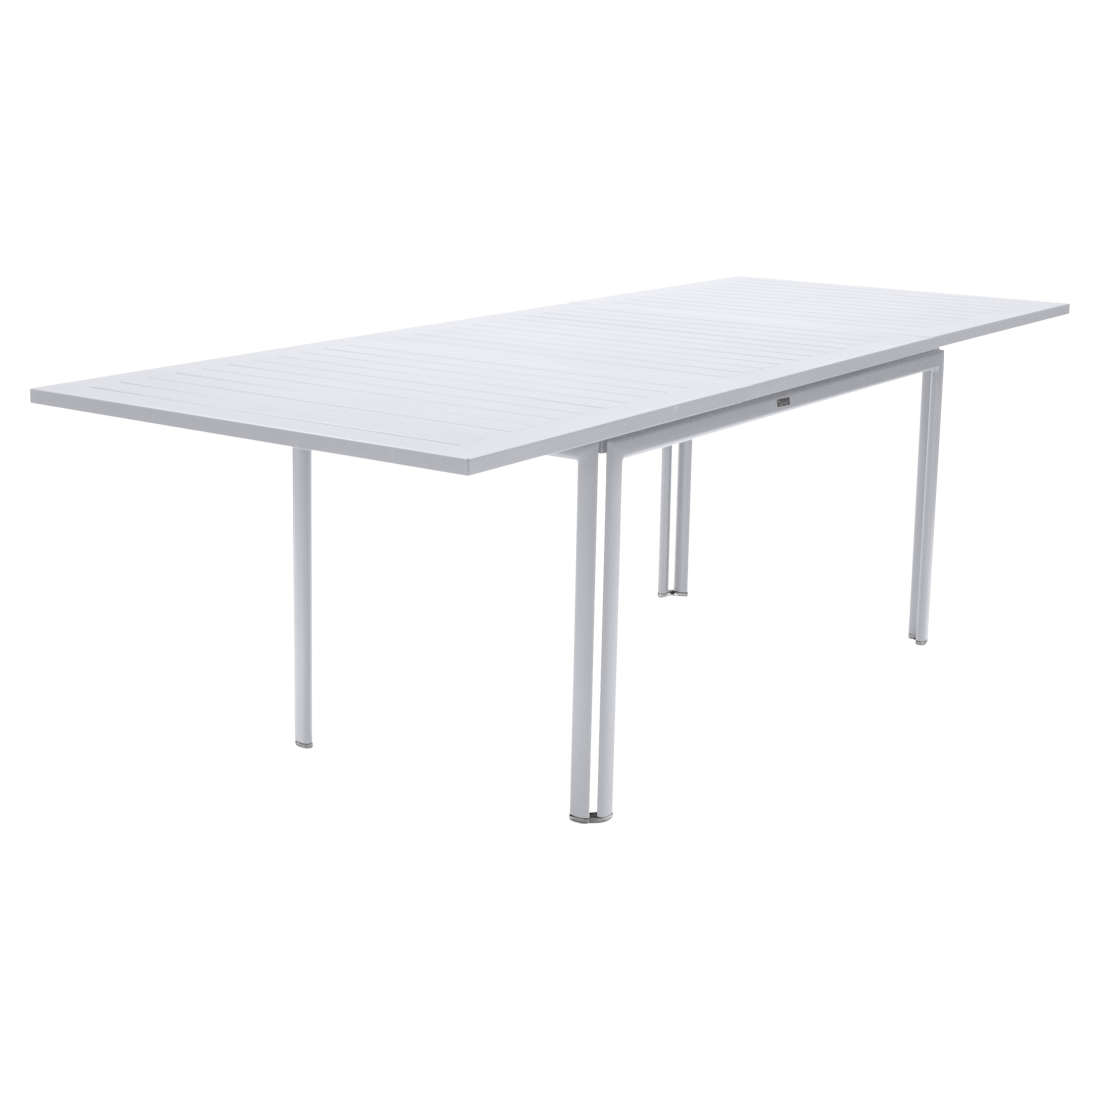 table de jardin, table metal rallonge, grande table de jardin, table metal blanche